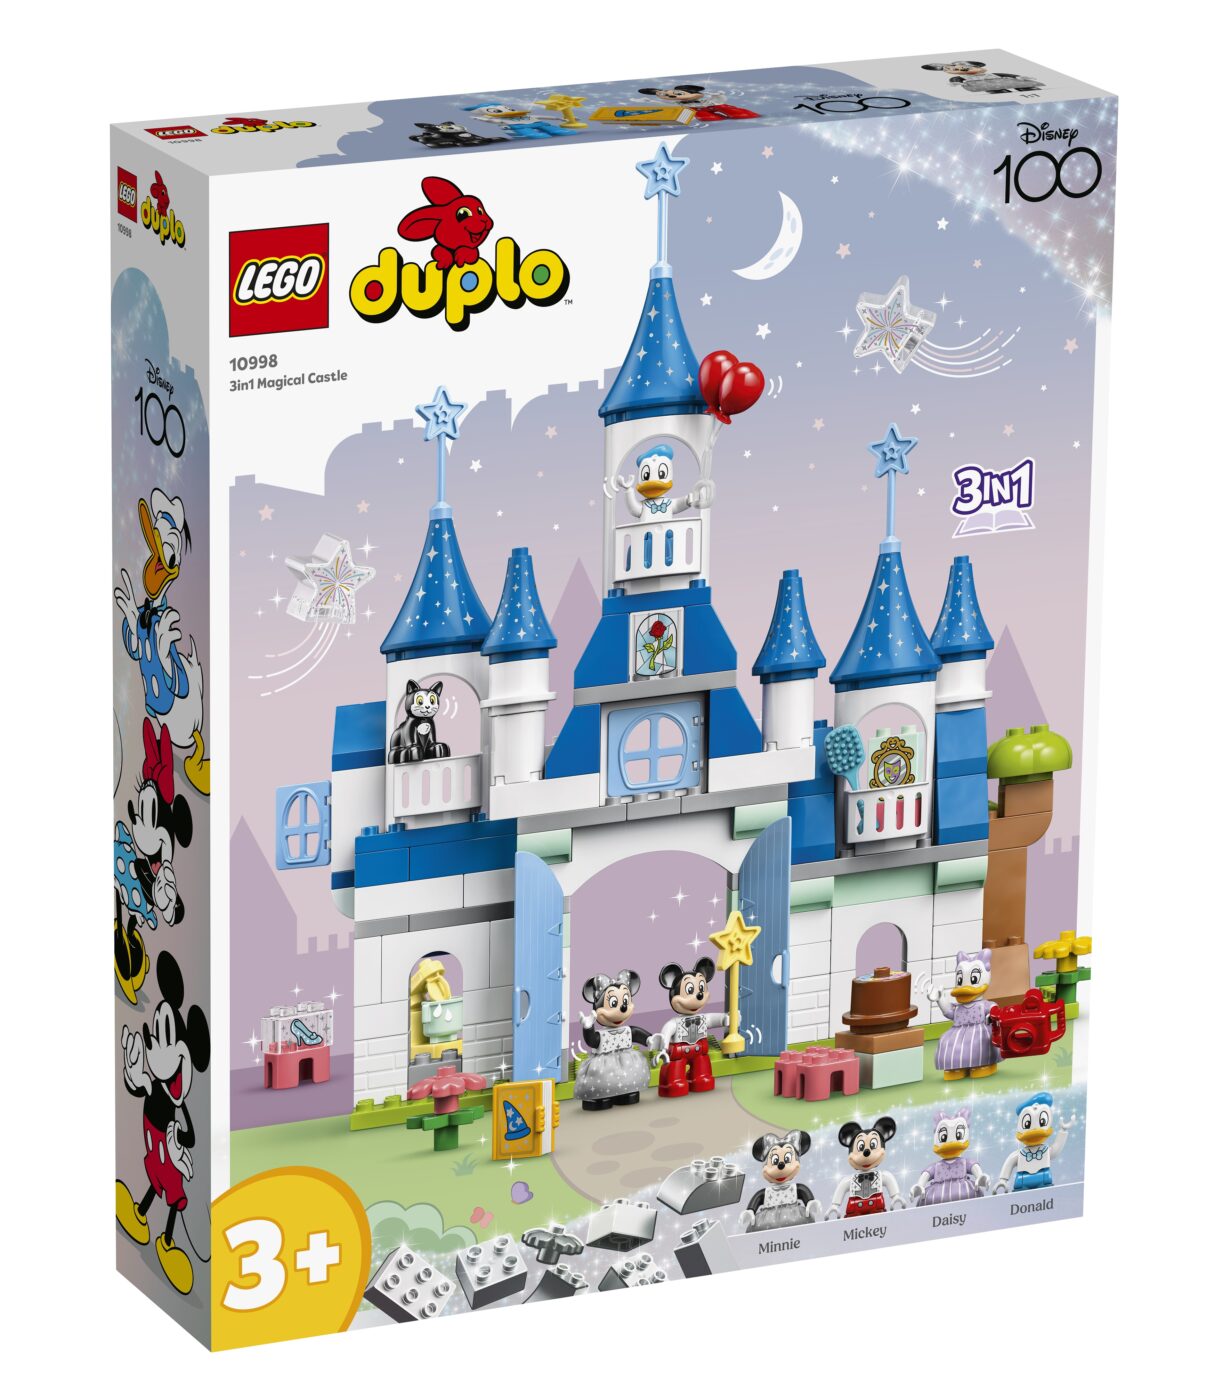 10998 DUPLO Disney 3 in 1 Magical Castle Box